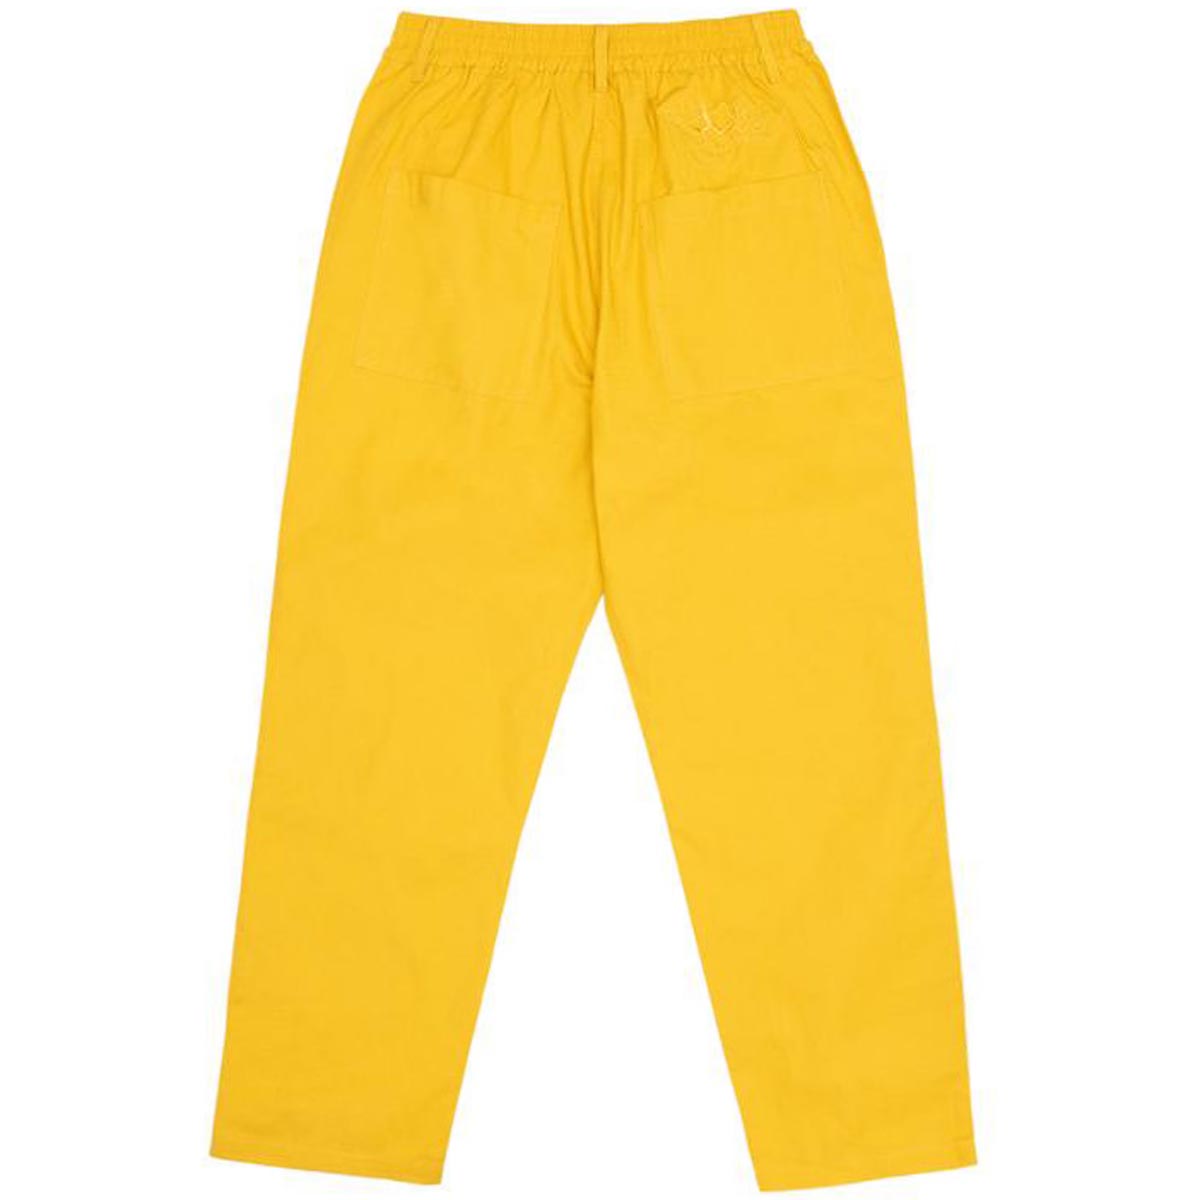 WKND Loosies Pants - Yellow image 2